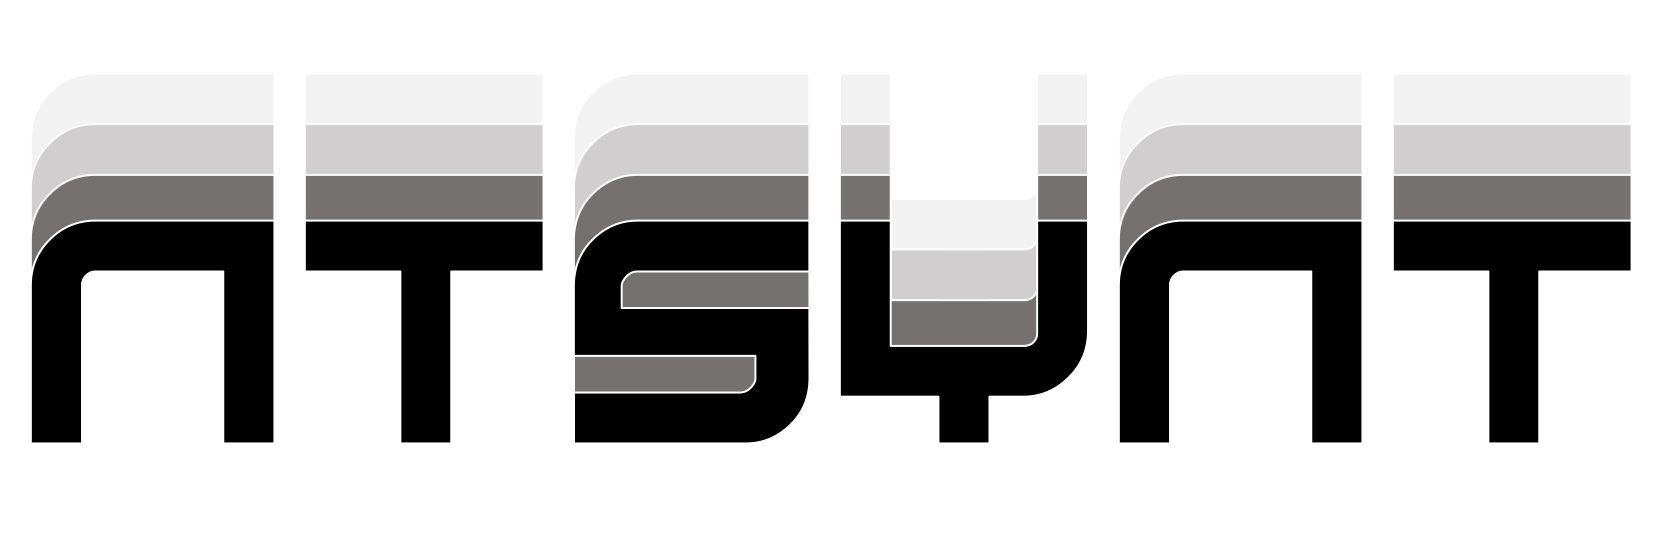 ntsynt-logo.png